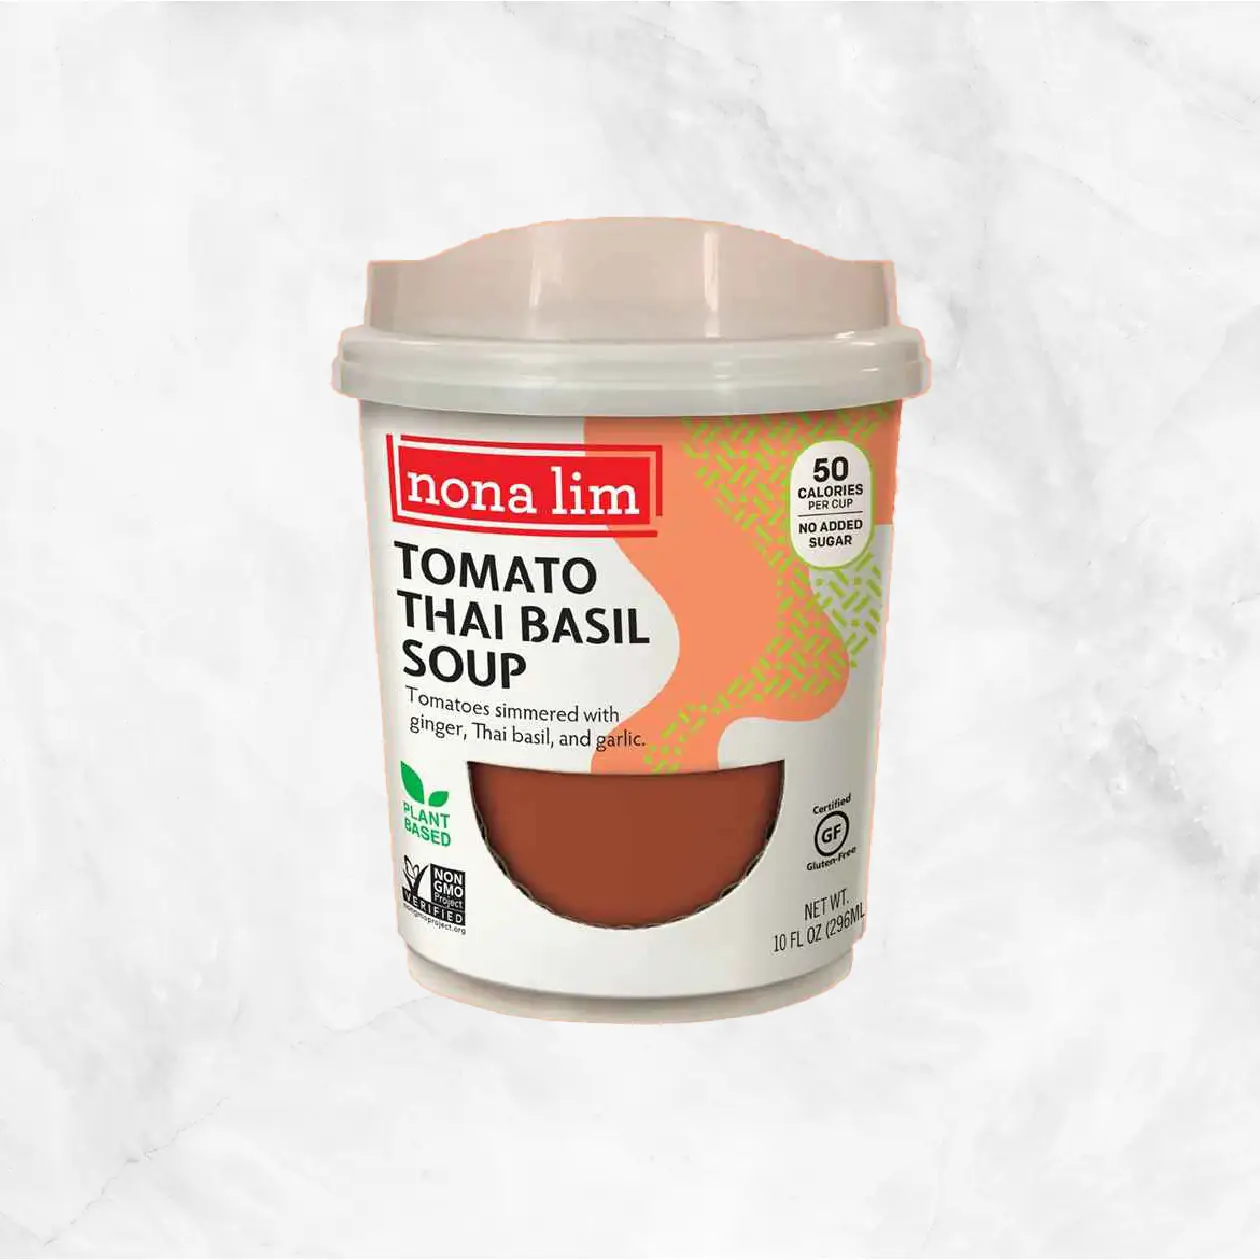 Tomato Thai Basil Soup Heat & Sip Cup